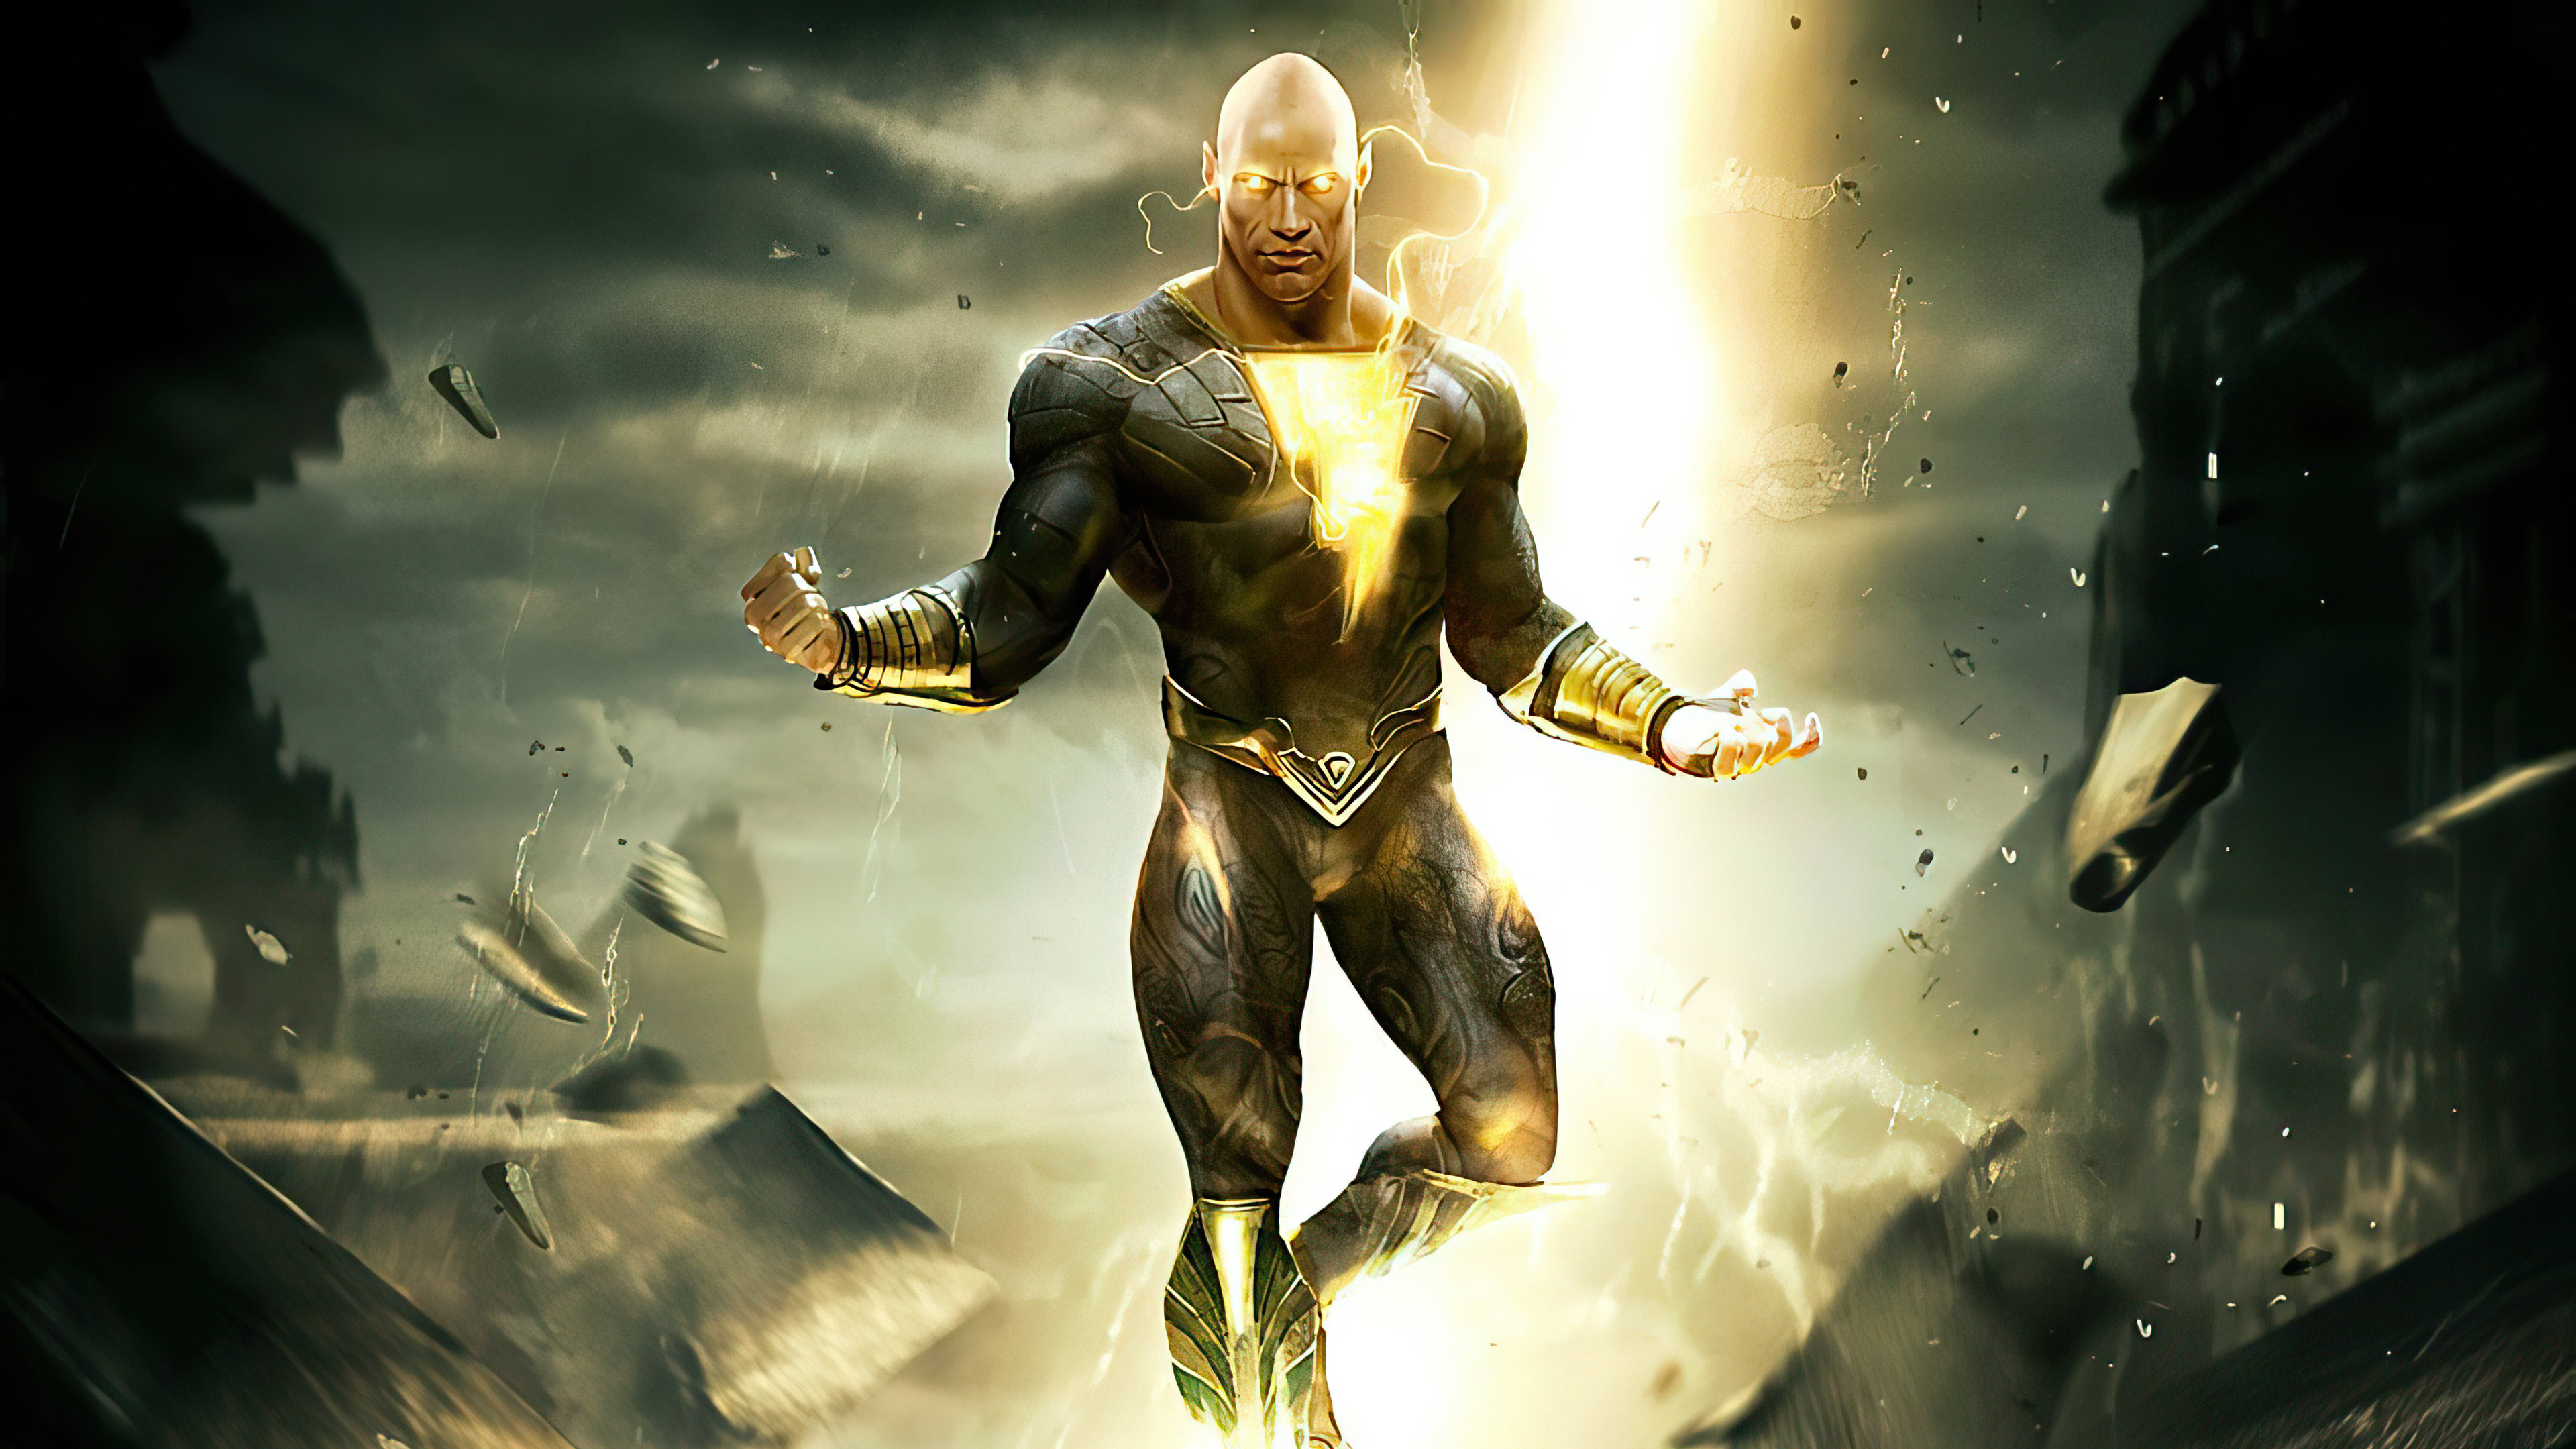 Black adam superheroes artwork artist hd k